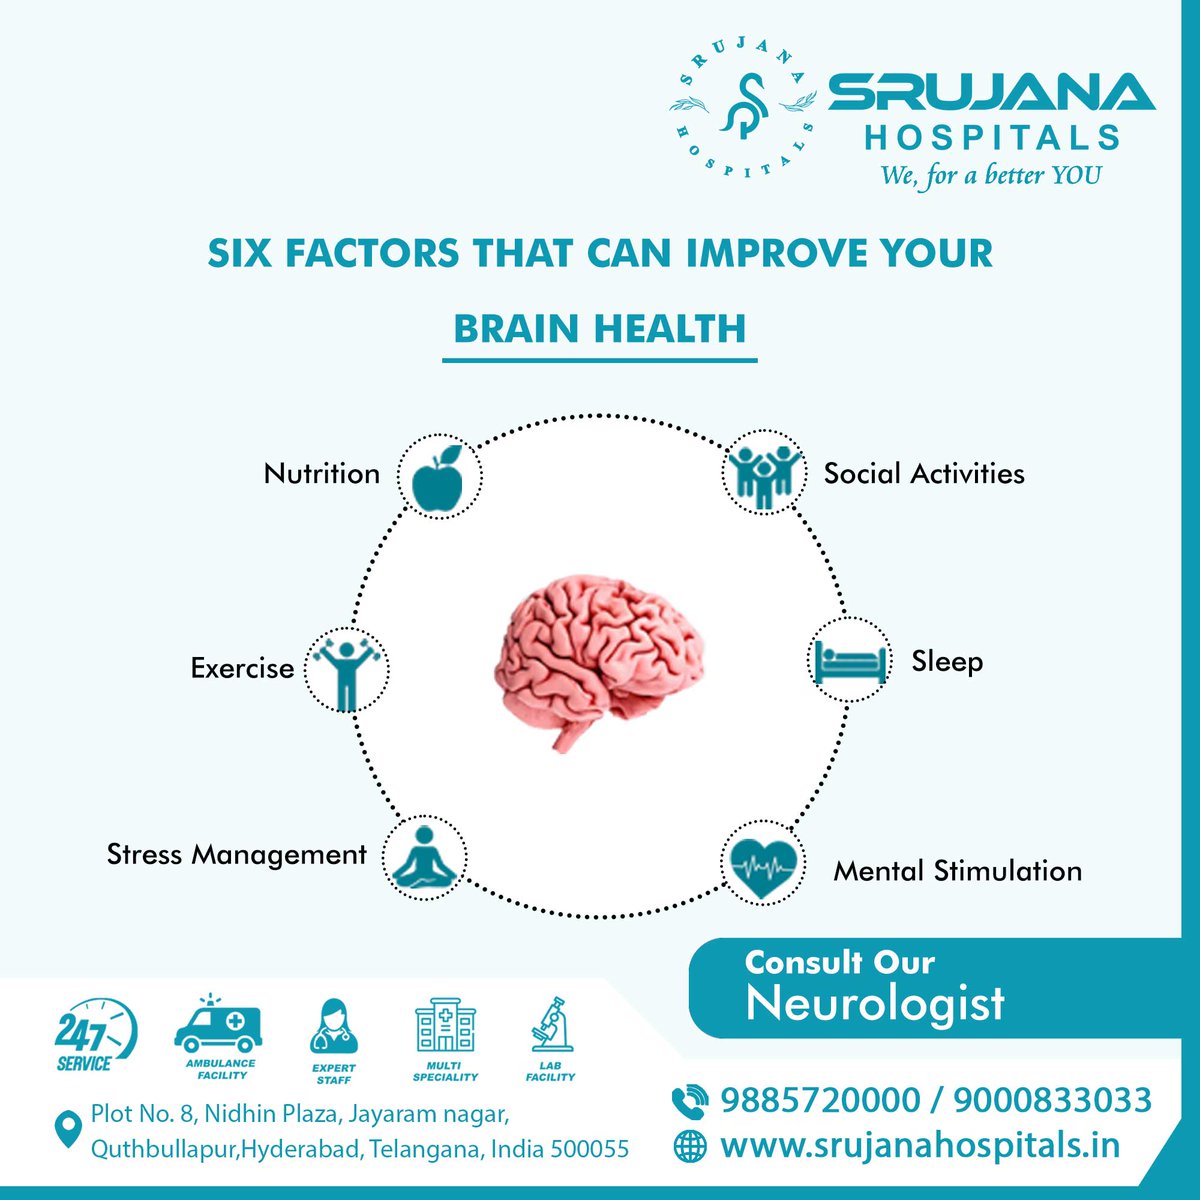 Many factors can contribute to improving brain health.

#brainhealth #brain #mentalhealth #neuroscience #brainpower #medical #neurology #goodsleep #stressmanagement #socialactivites #MentalStimulation #srujanahospitals #Hyderabad